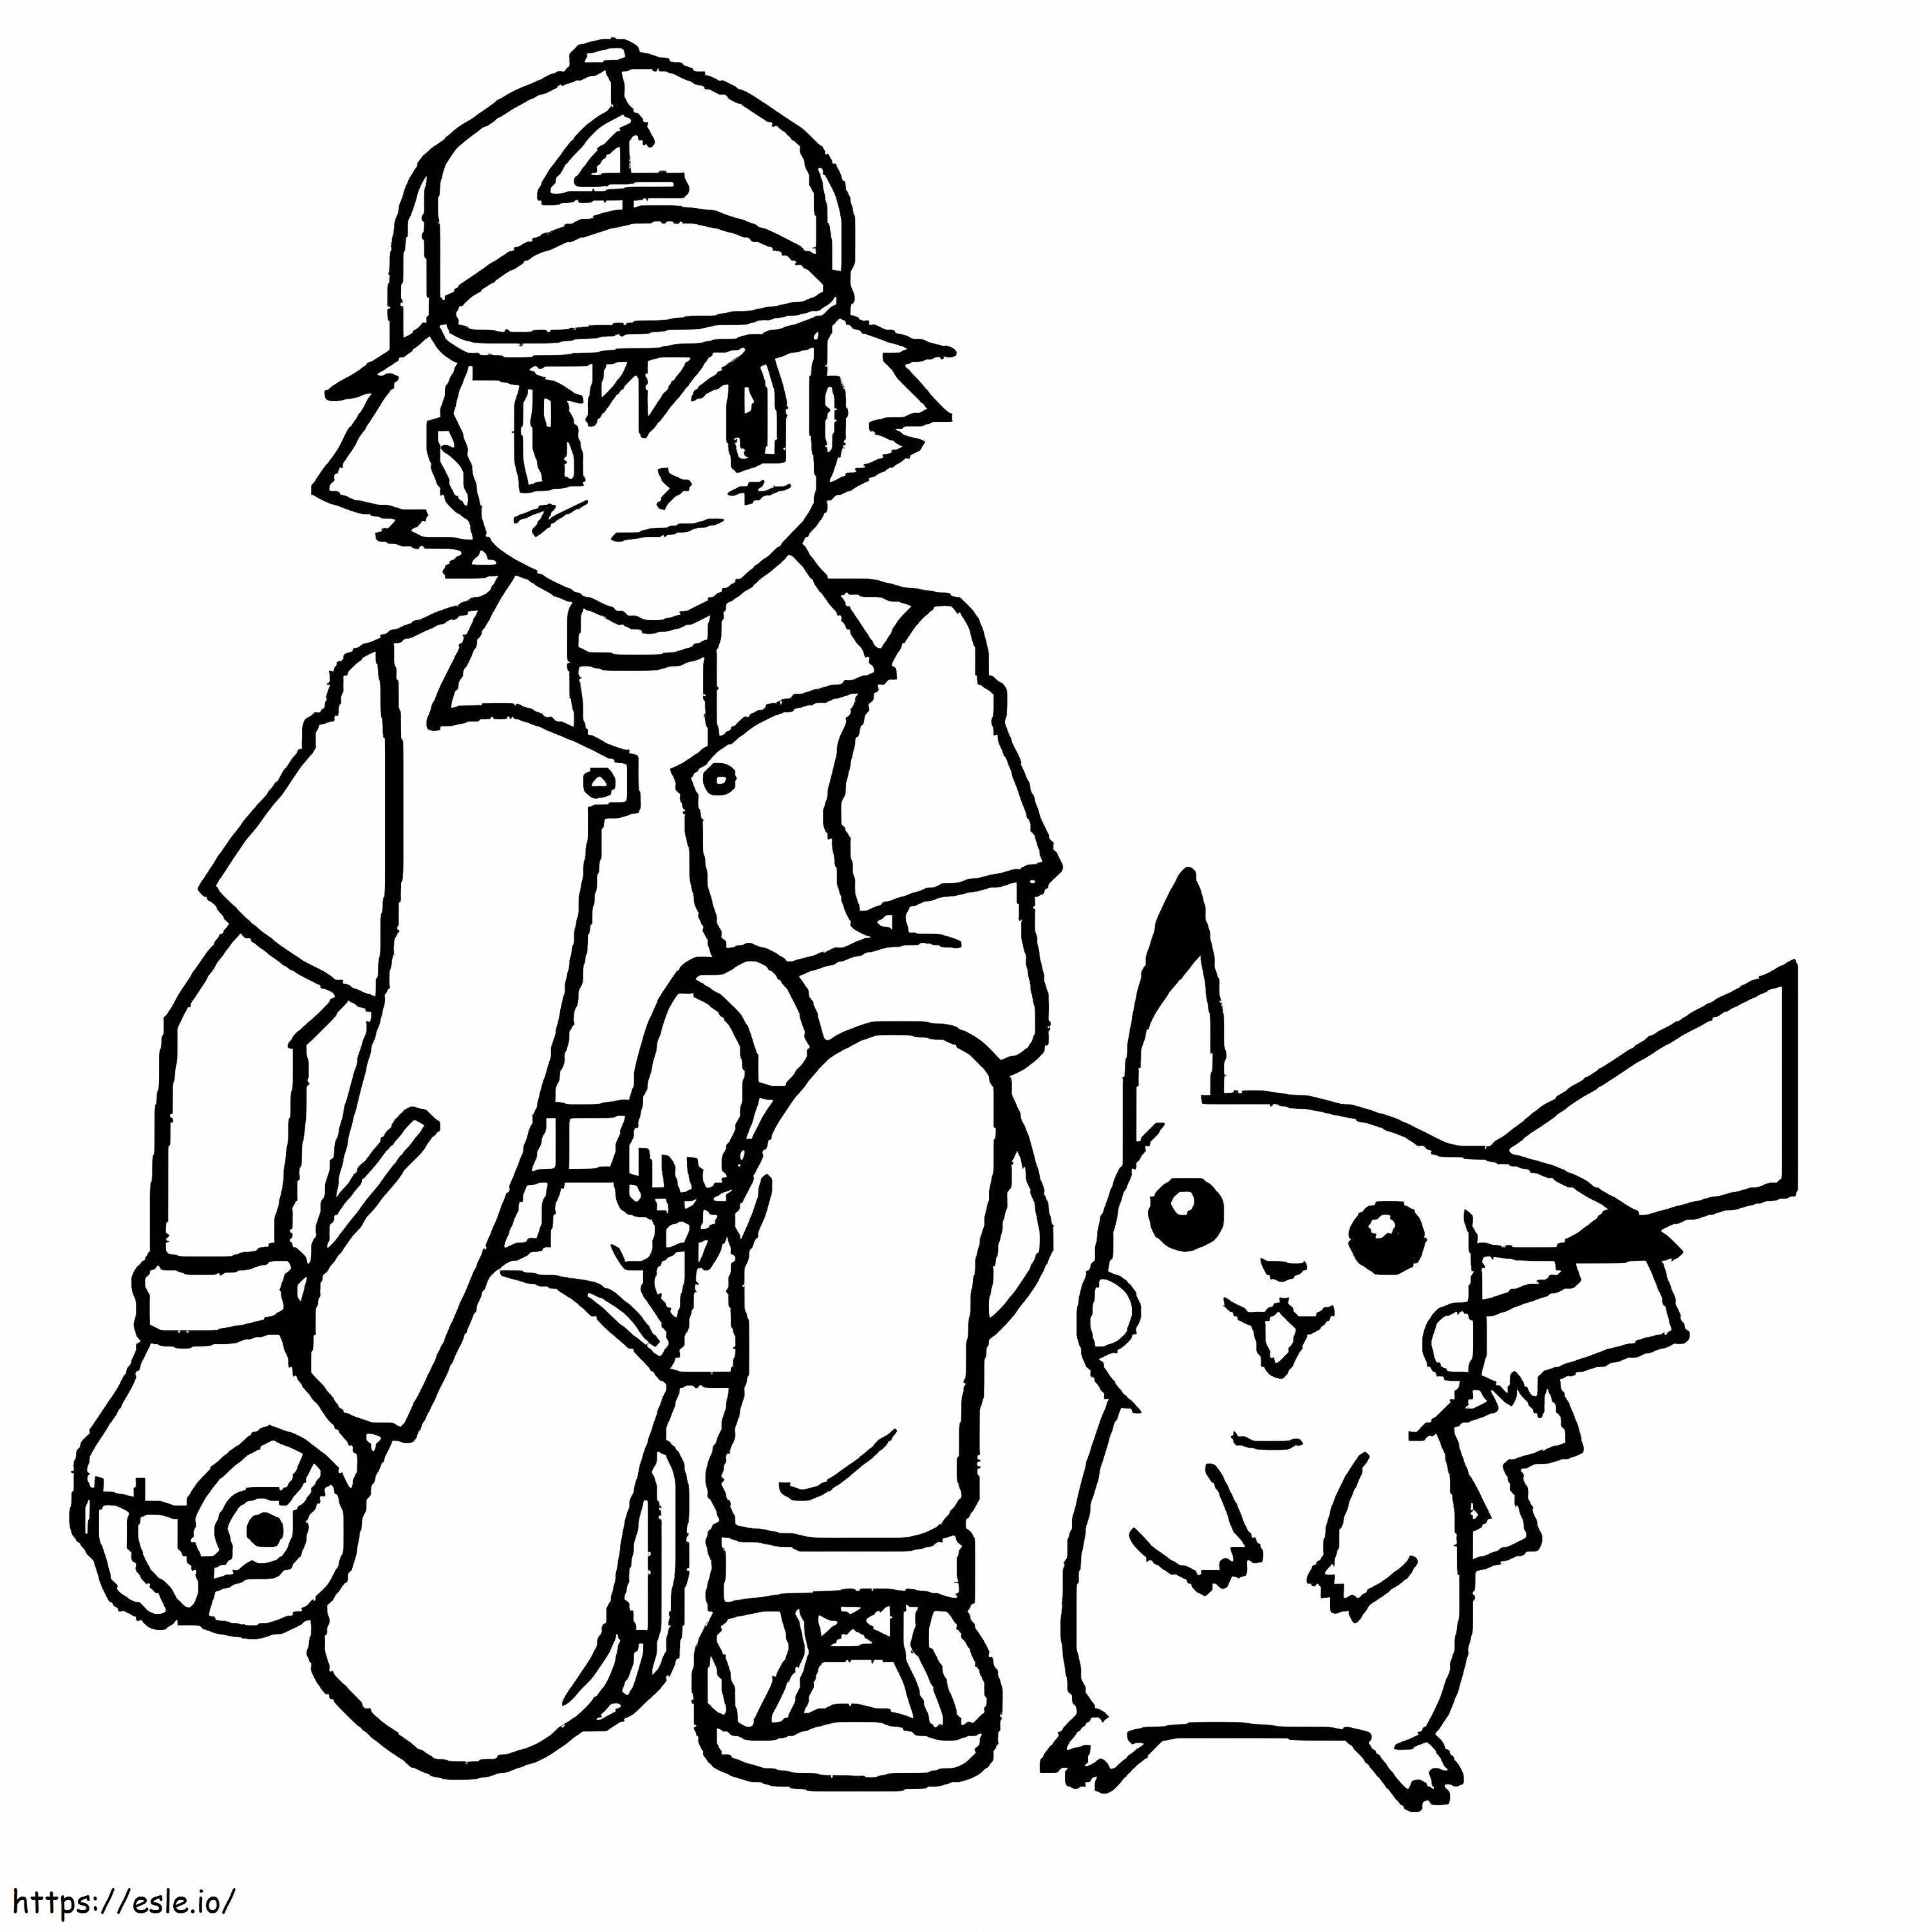 Satoshi ve Pikachu boyama